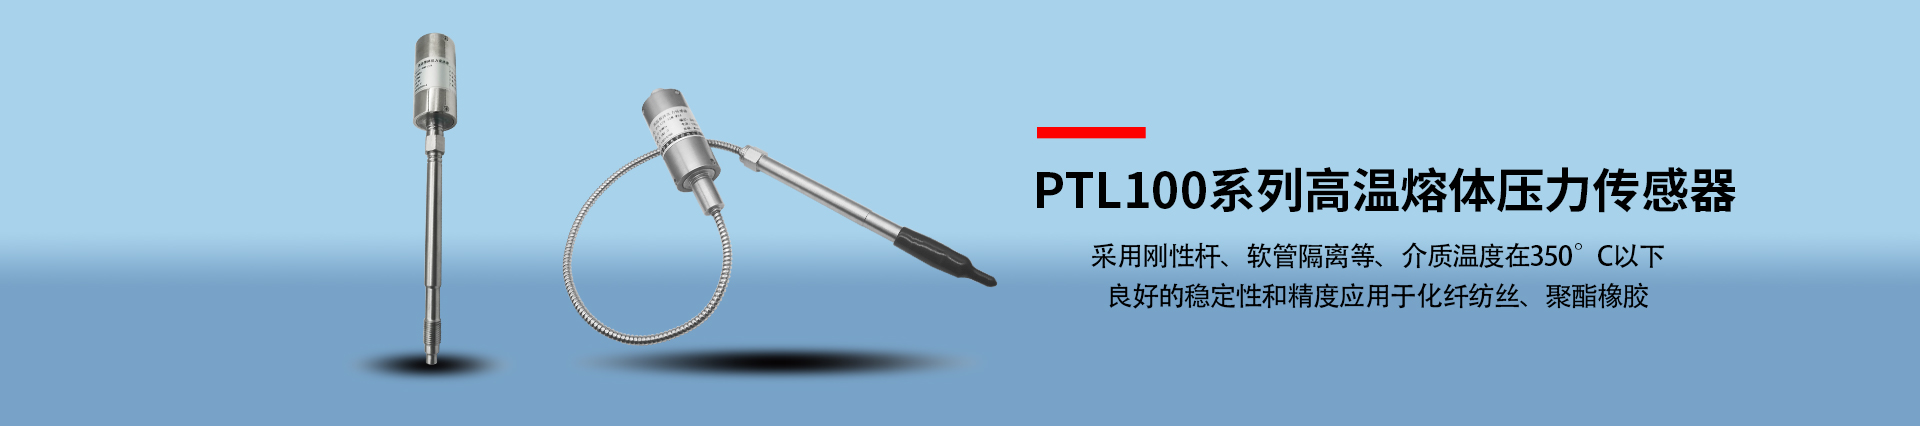 PTL100系列高温熔体压力传感器